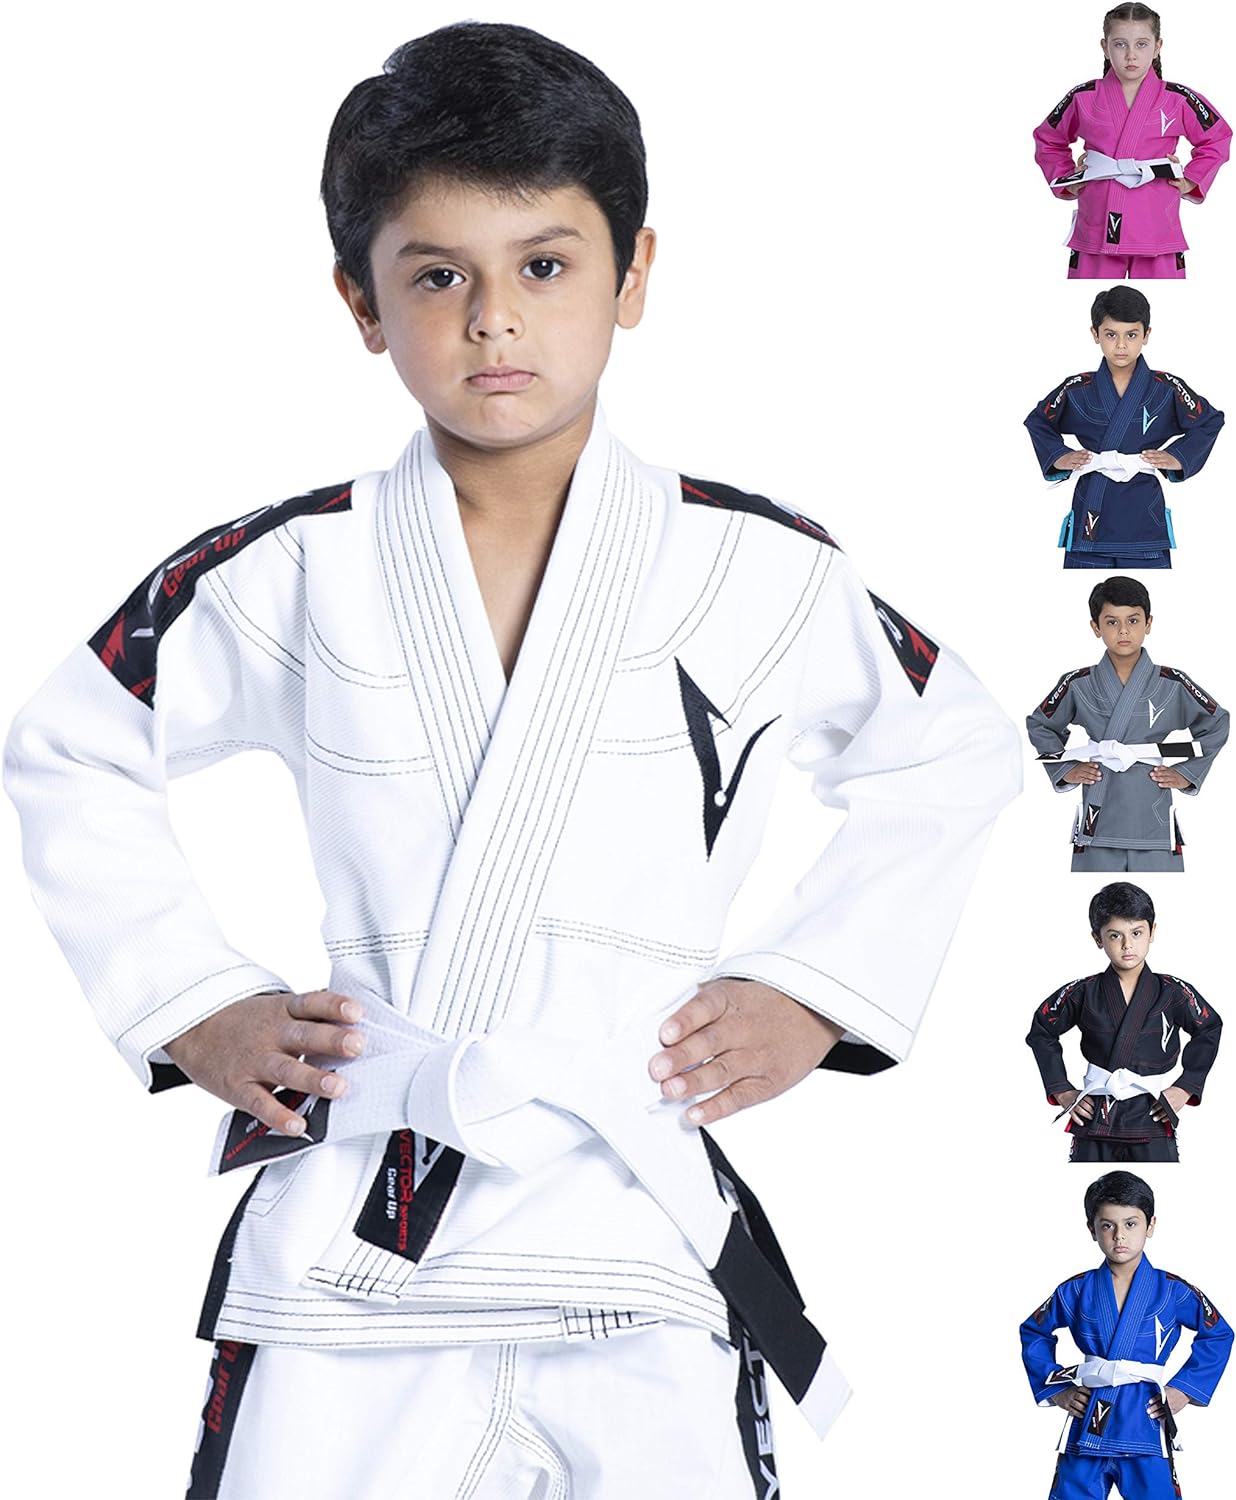 Eclipse Martial Art Supplies sporting goods K0 / White Brazilian BJJ Gi Jiu Jitsu Gi for Child Kids Gi Uniform Durable Pant & Jacket 100% Cotton with Free Belt